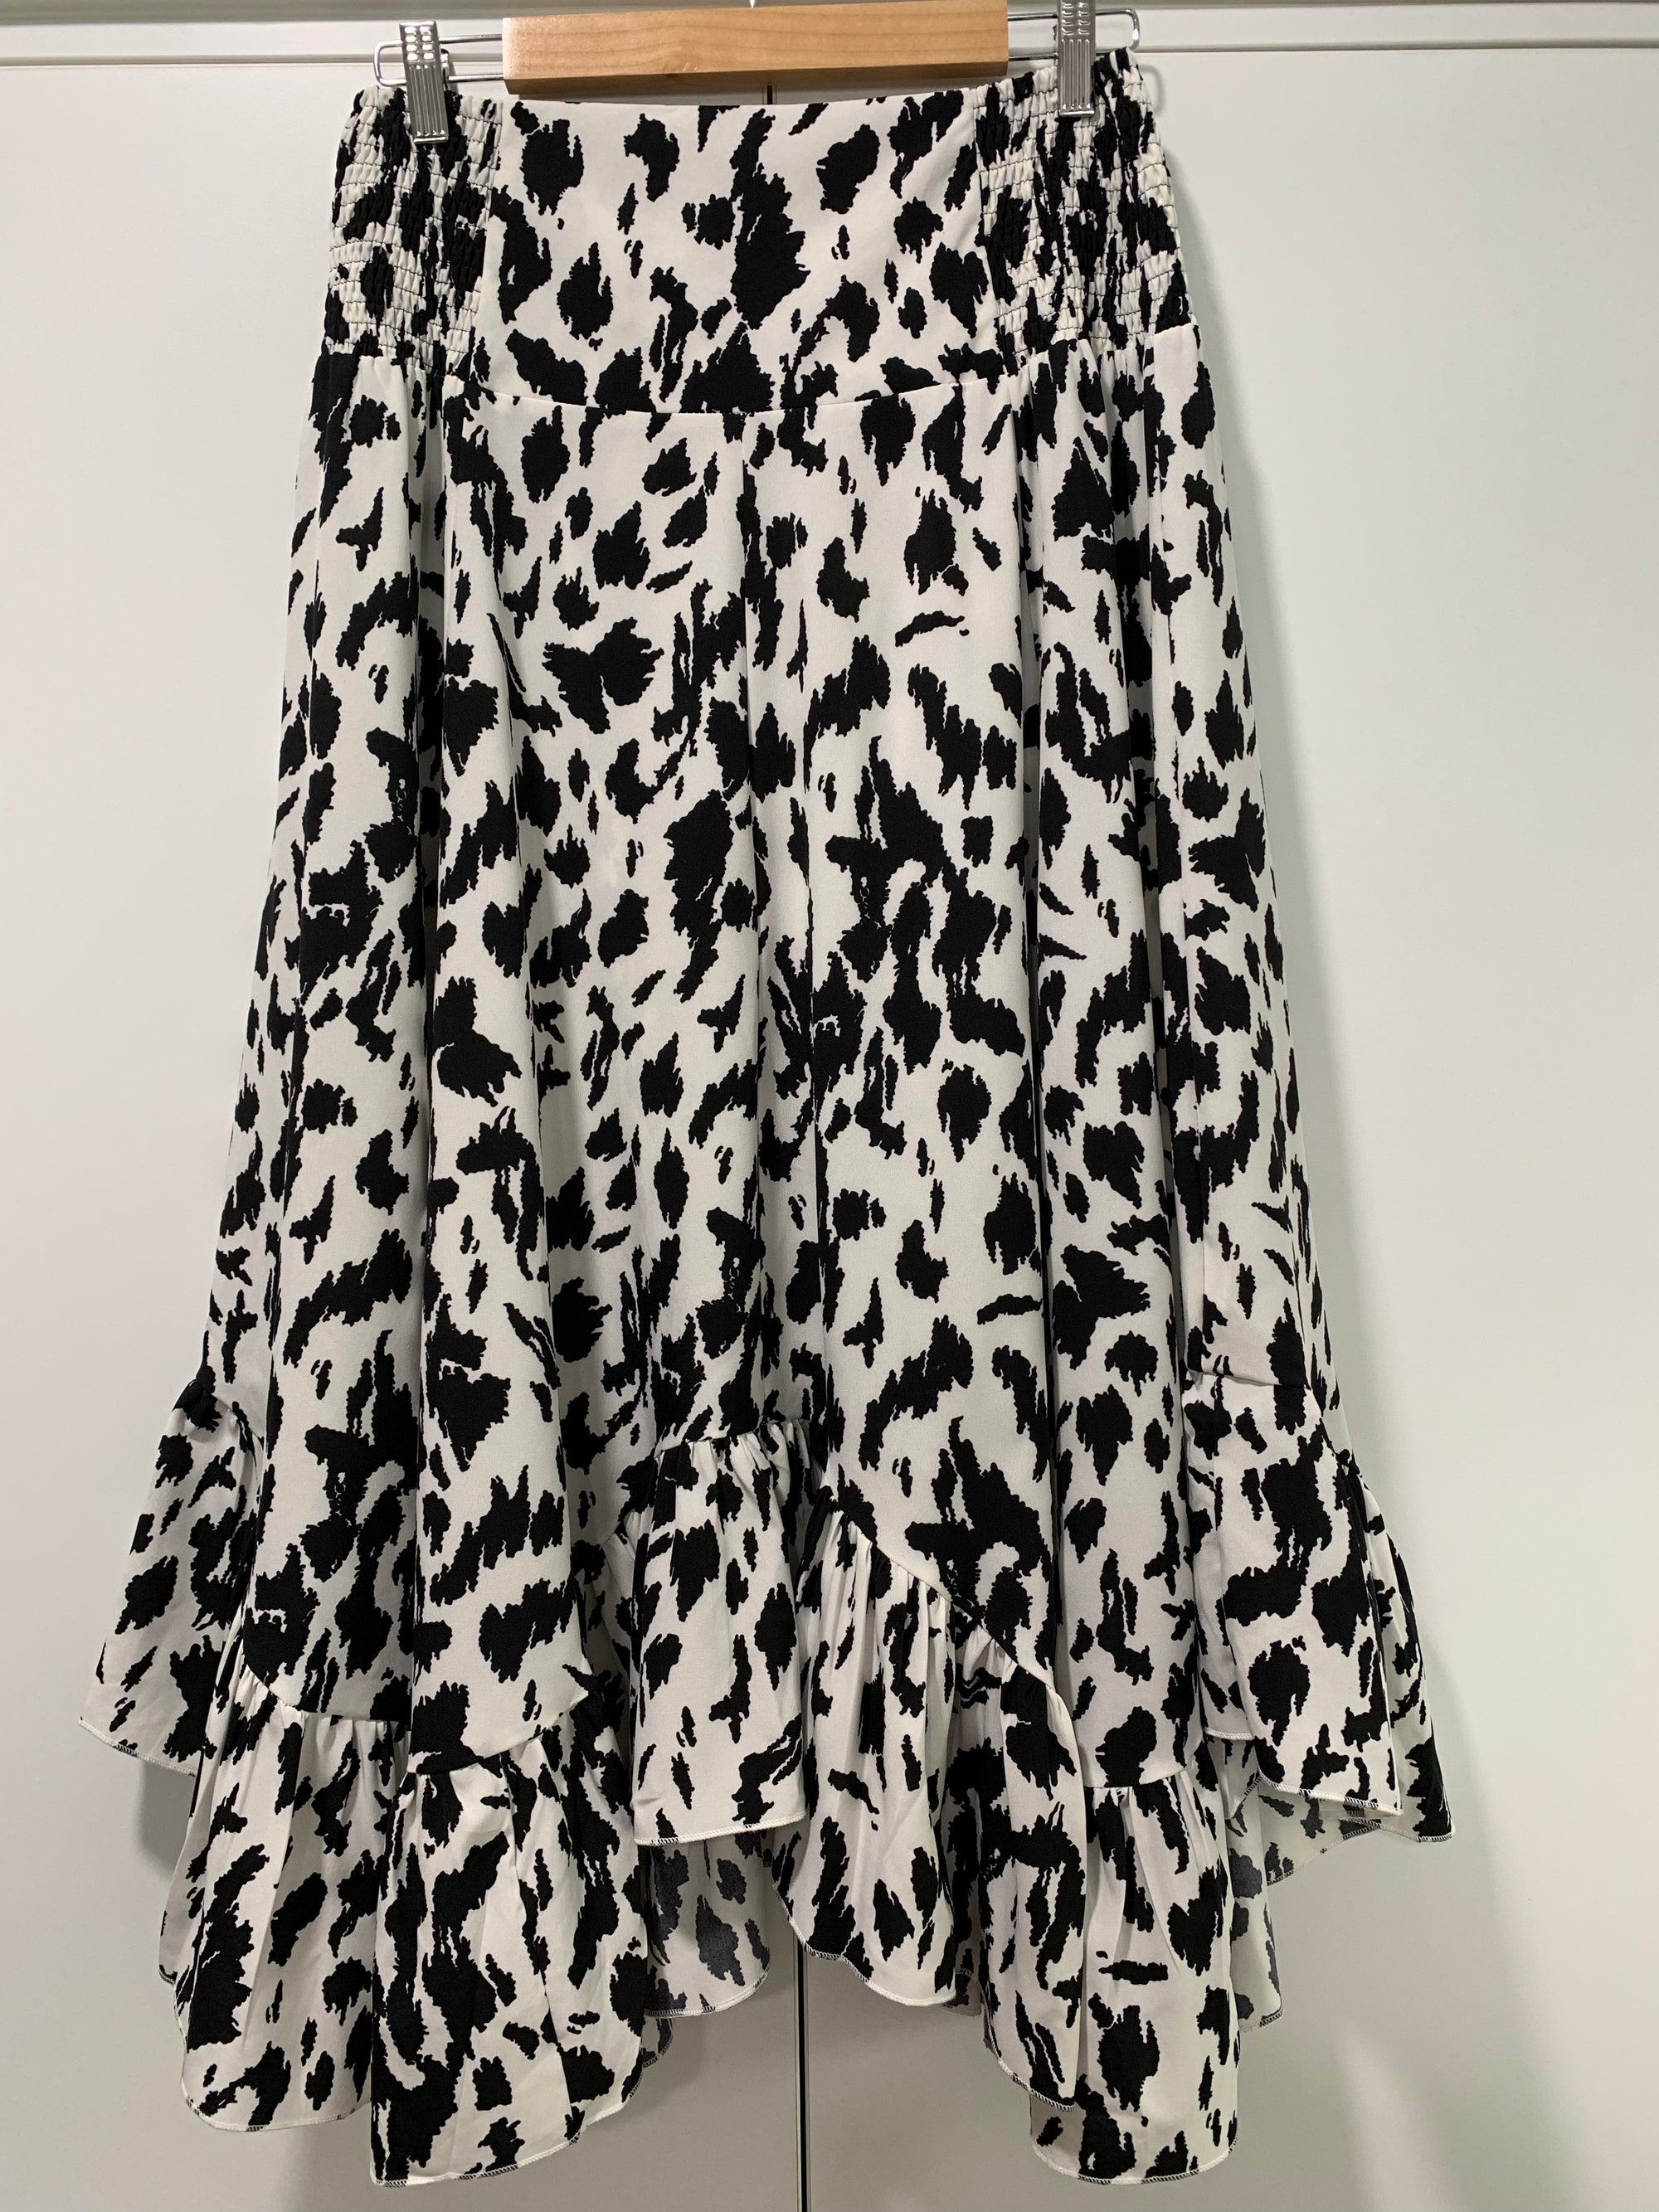 Maxi Skirt with Asymmetric Hemline & High Elastic Waist in Black and White